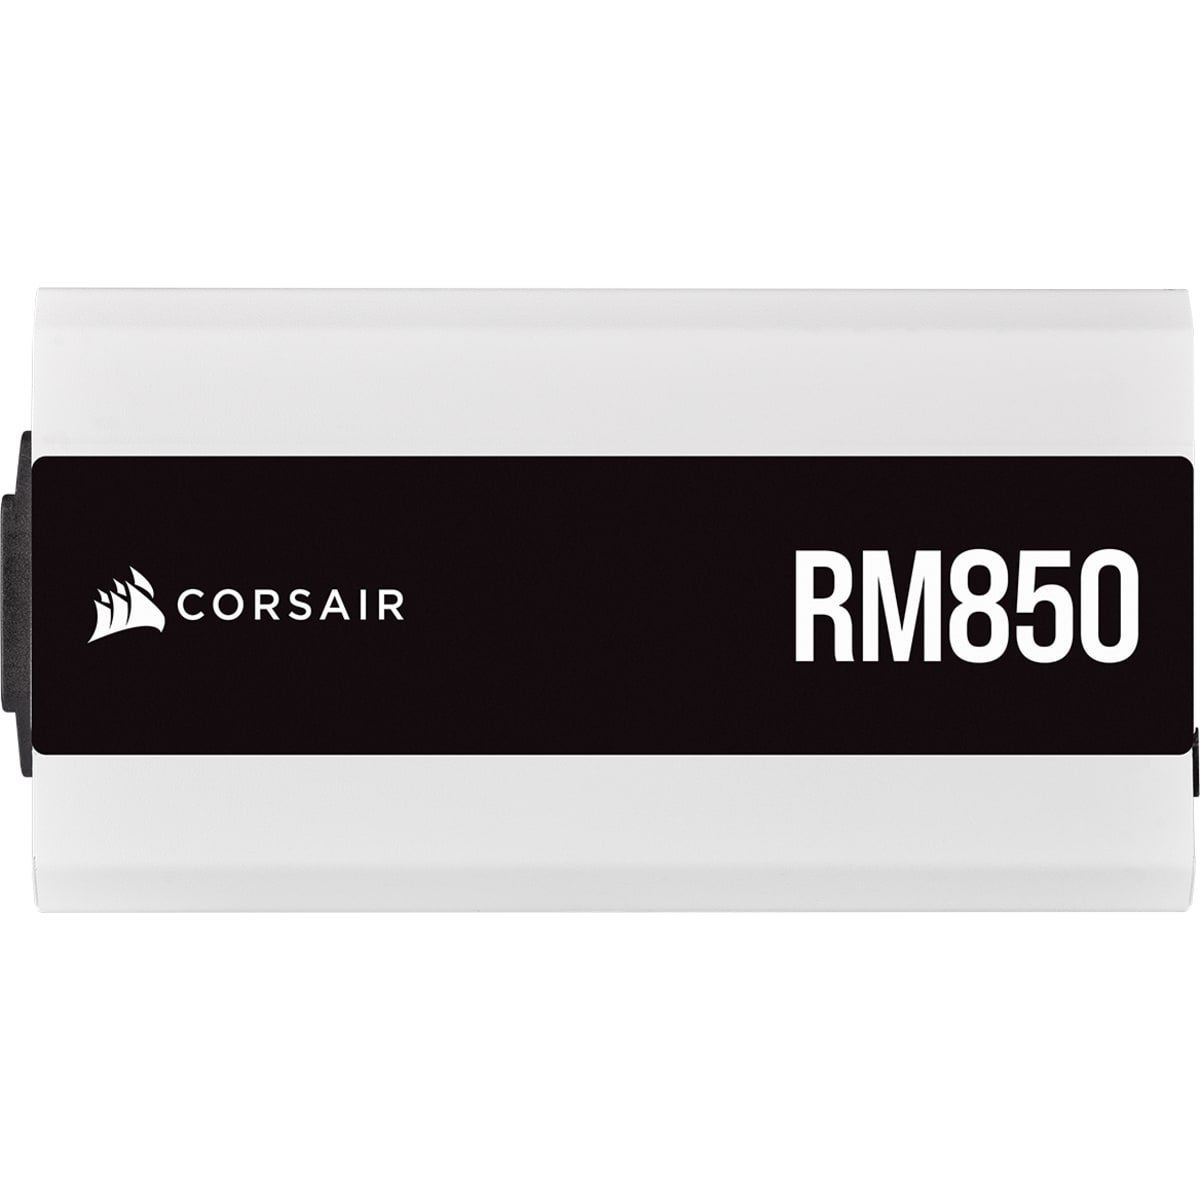 CORSAIR Netzteil RM White Series RM850, 850 Watt